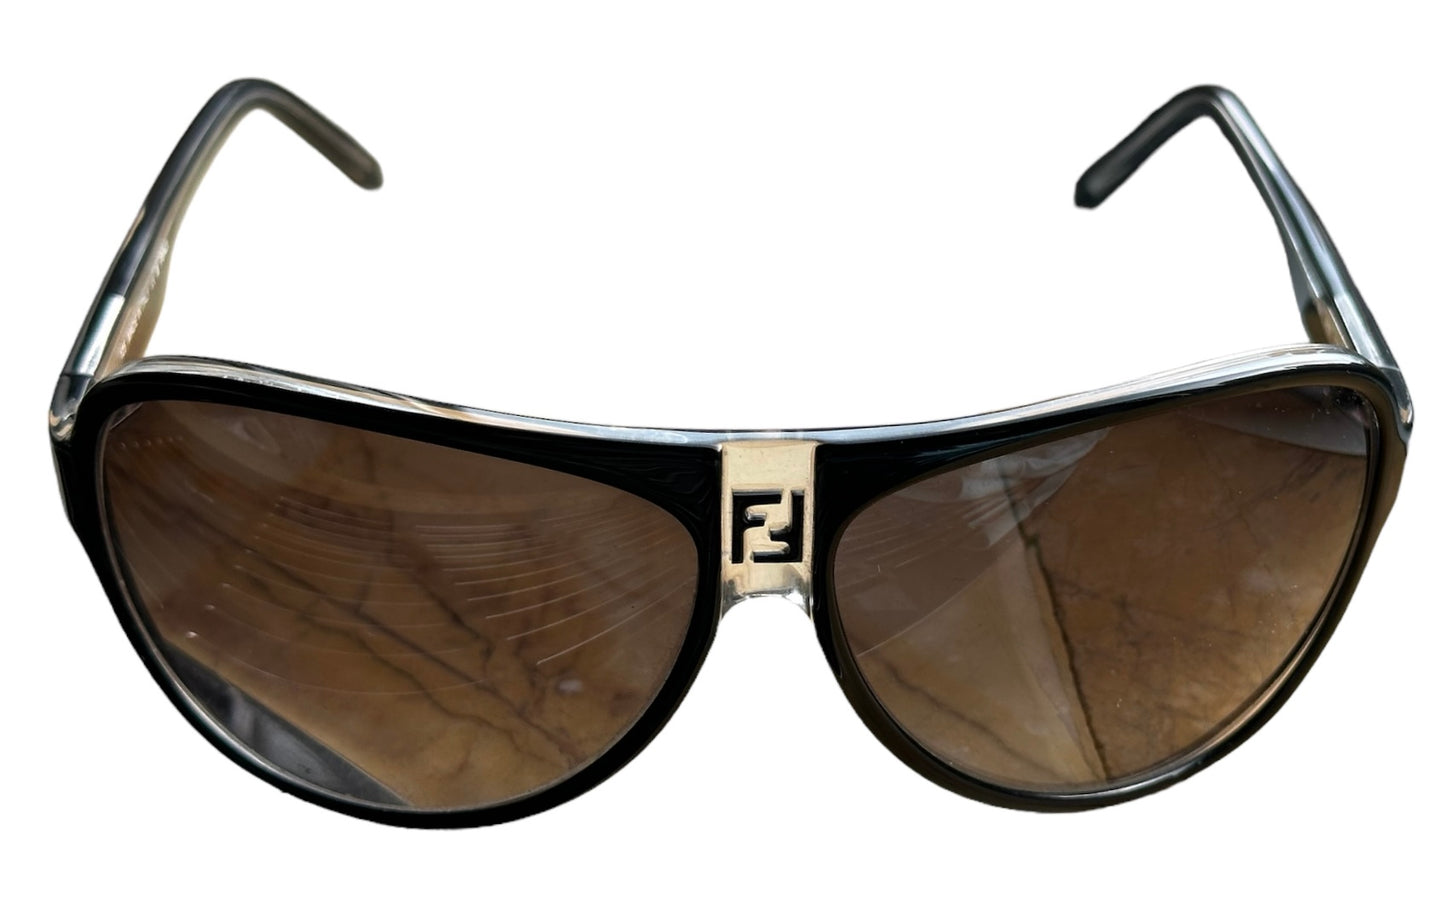 FENDI Premium Sunglasses - Made in Italy - New old stock